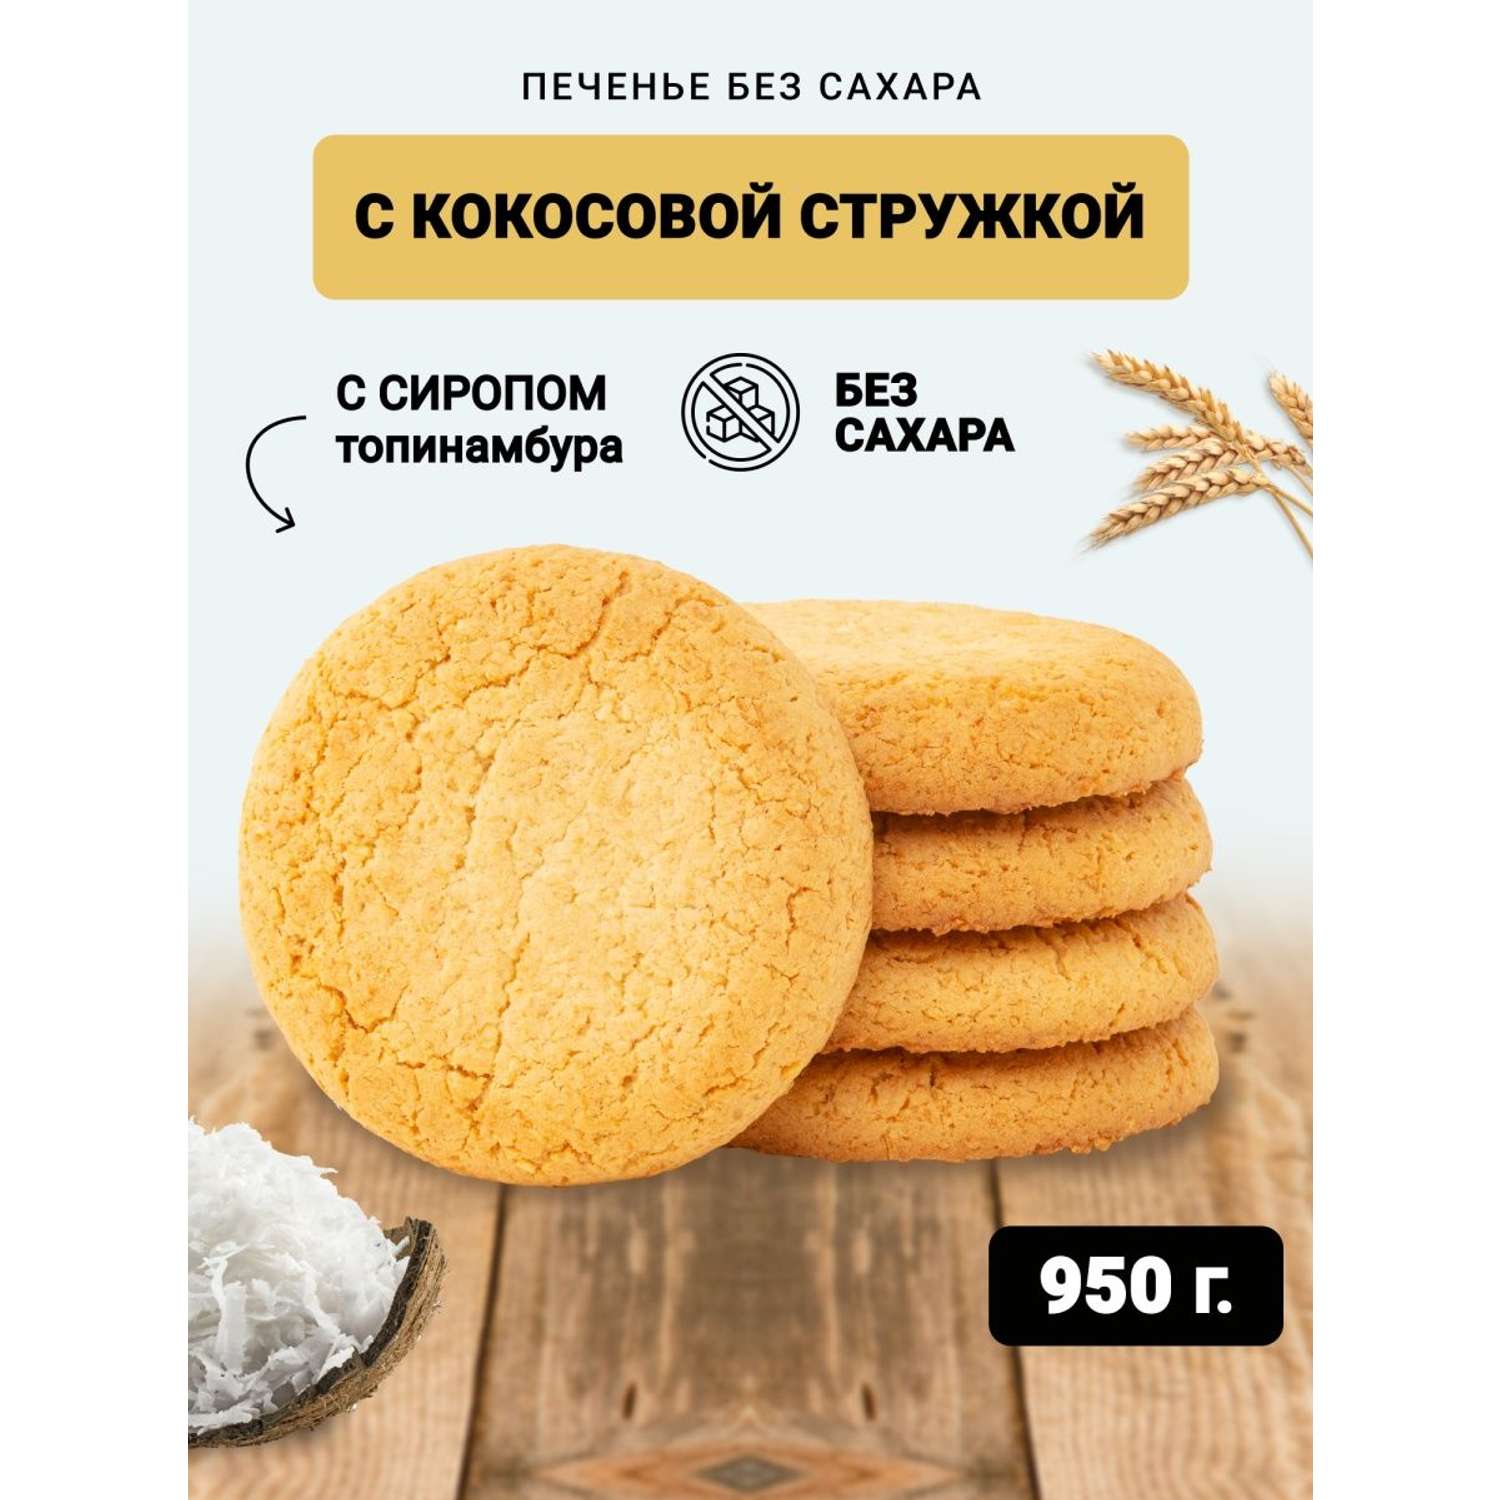 Печенье без сахара berner кокосовое на сиропе топинамбура в коробке 950гр - фото 1